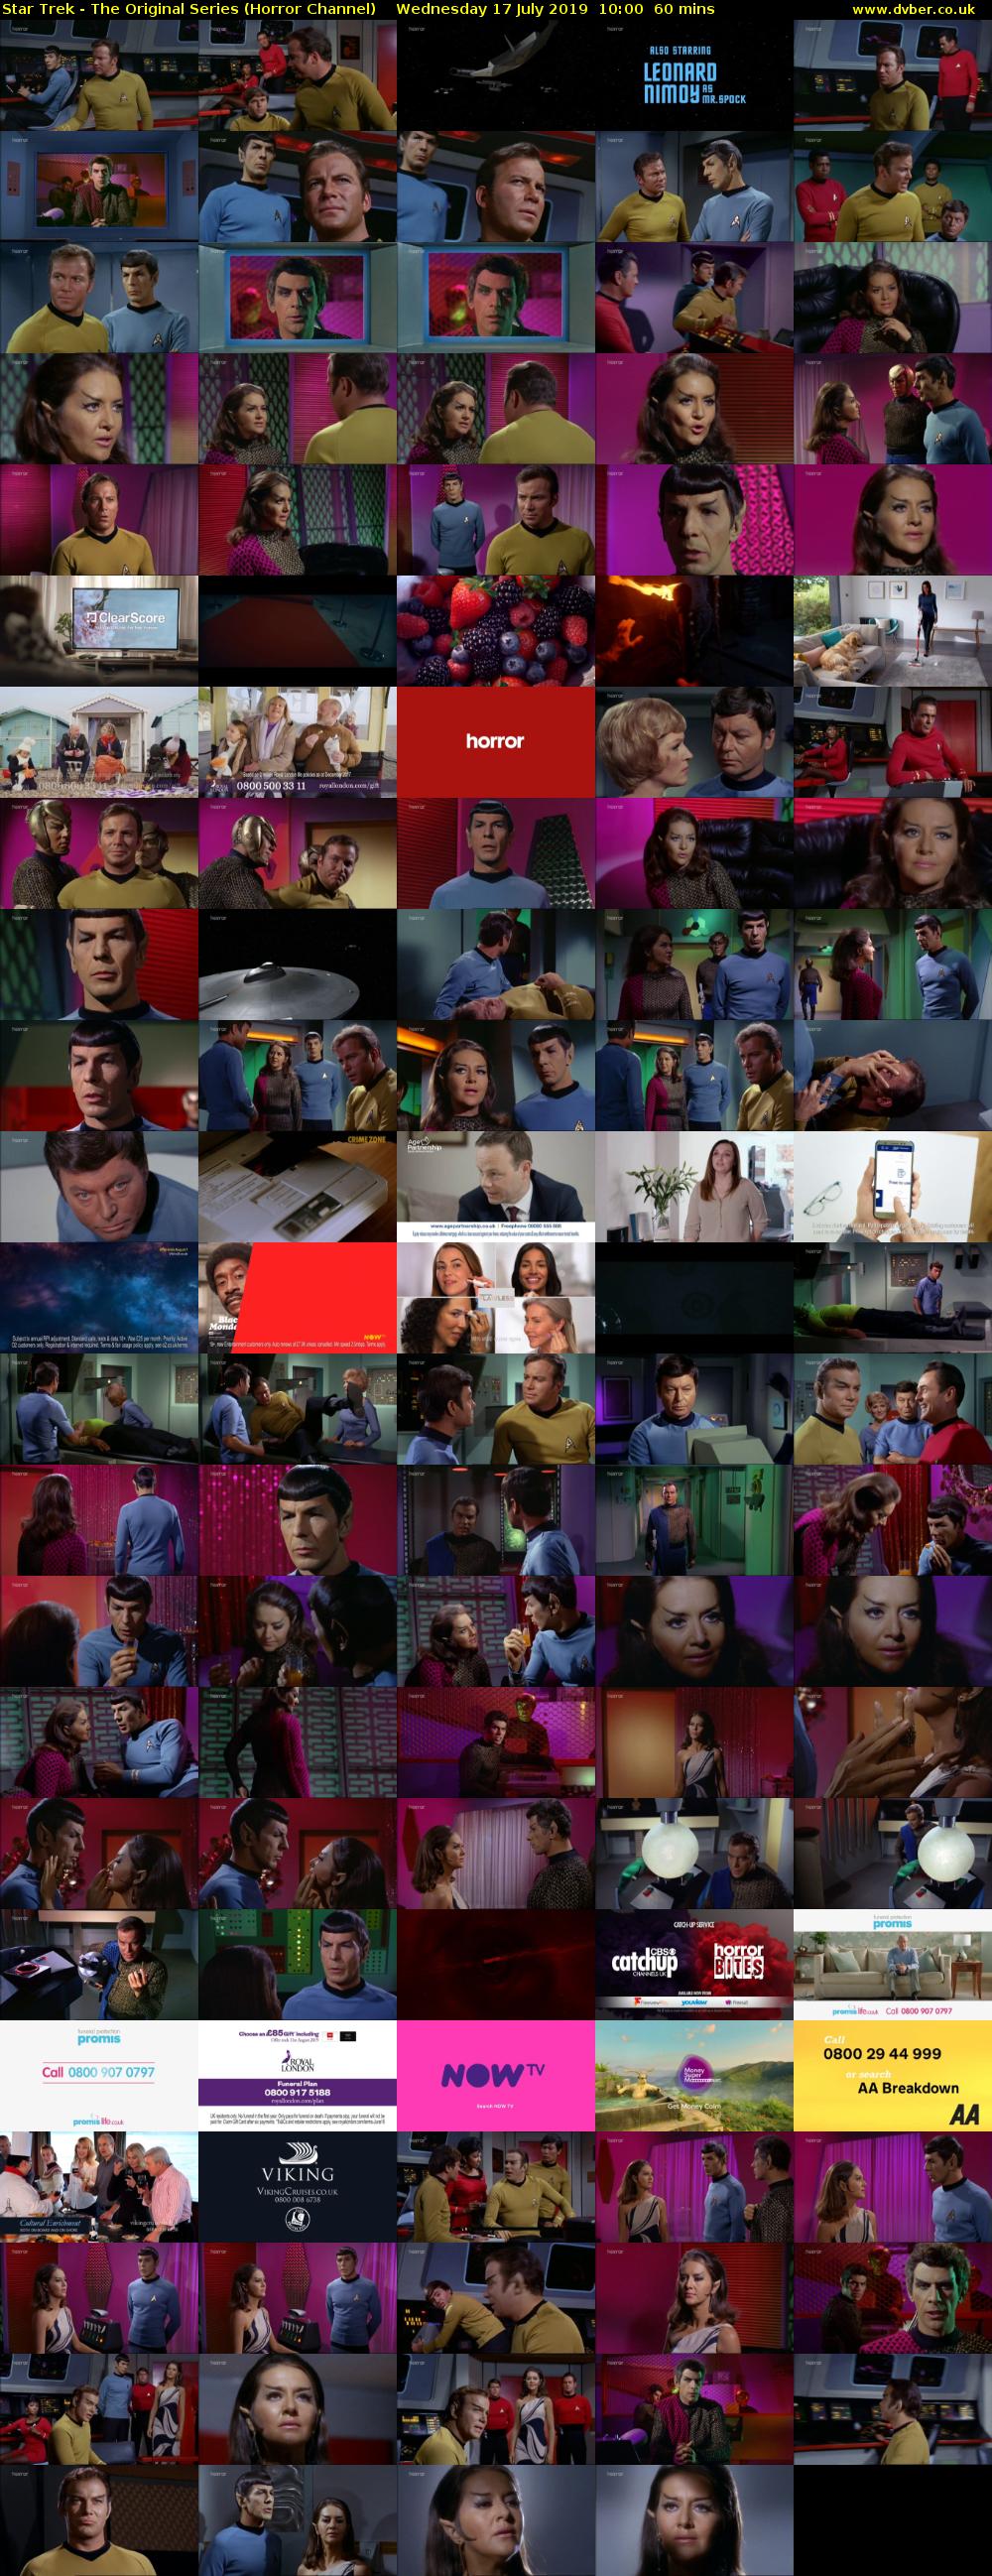 Star Trek - The Original Series (Horror Channel) Wednesday 17 July 2019 10:00 - 11:00